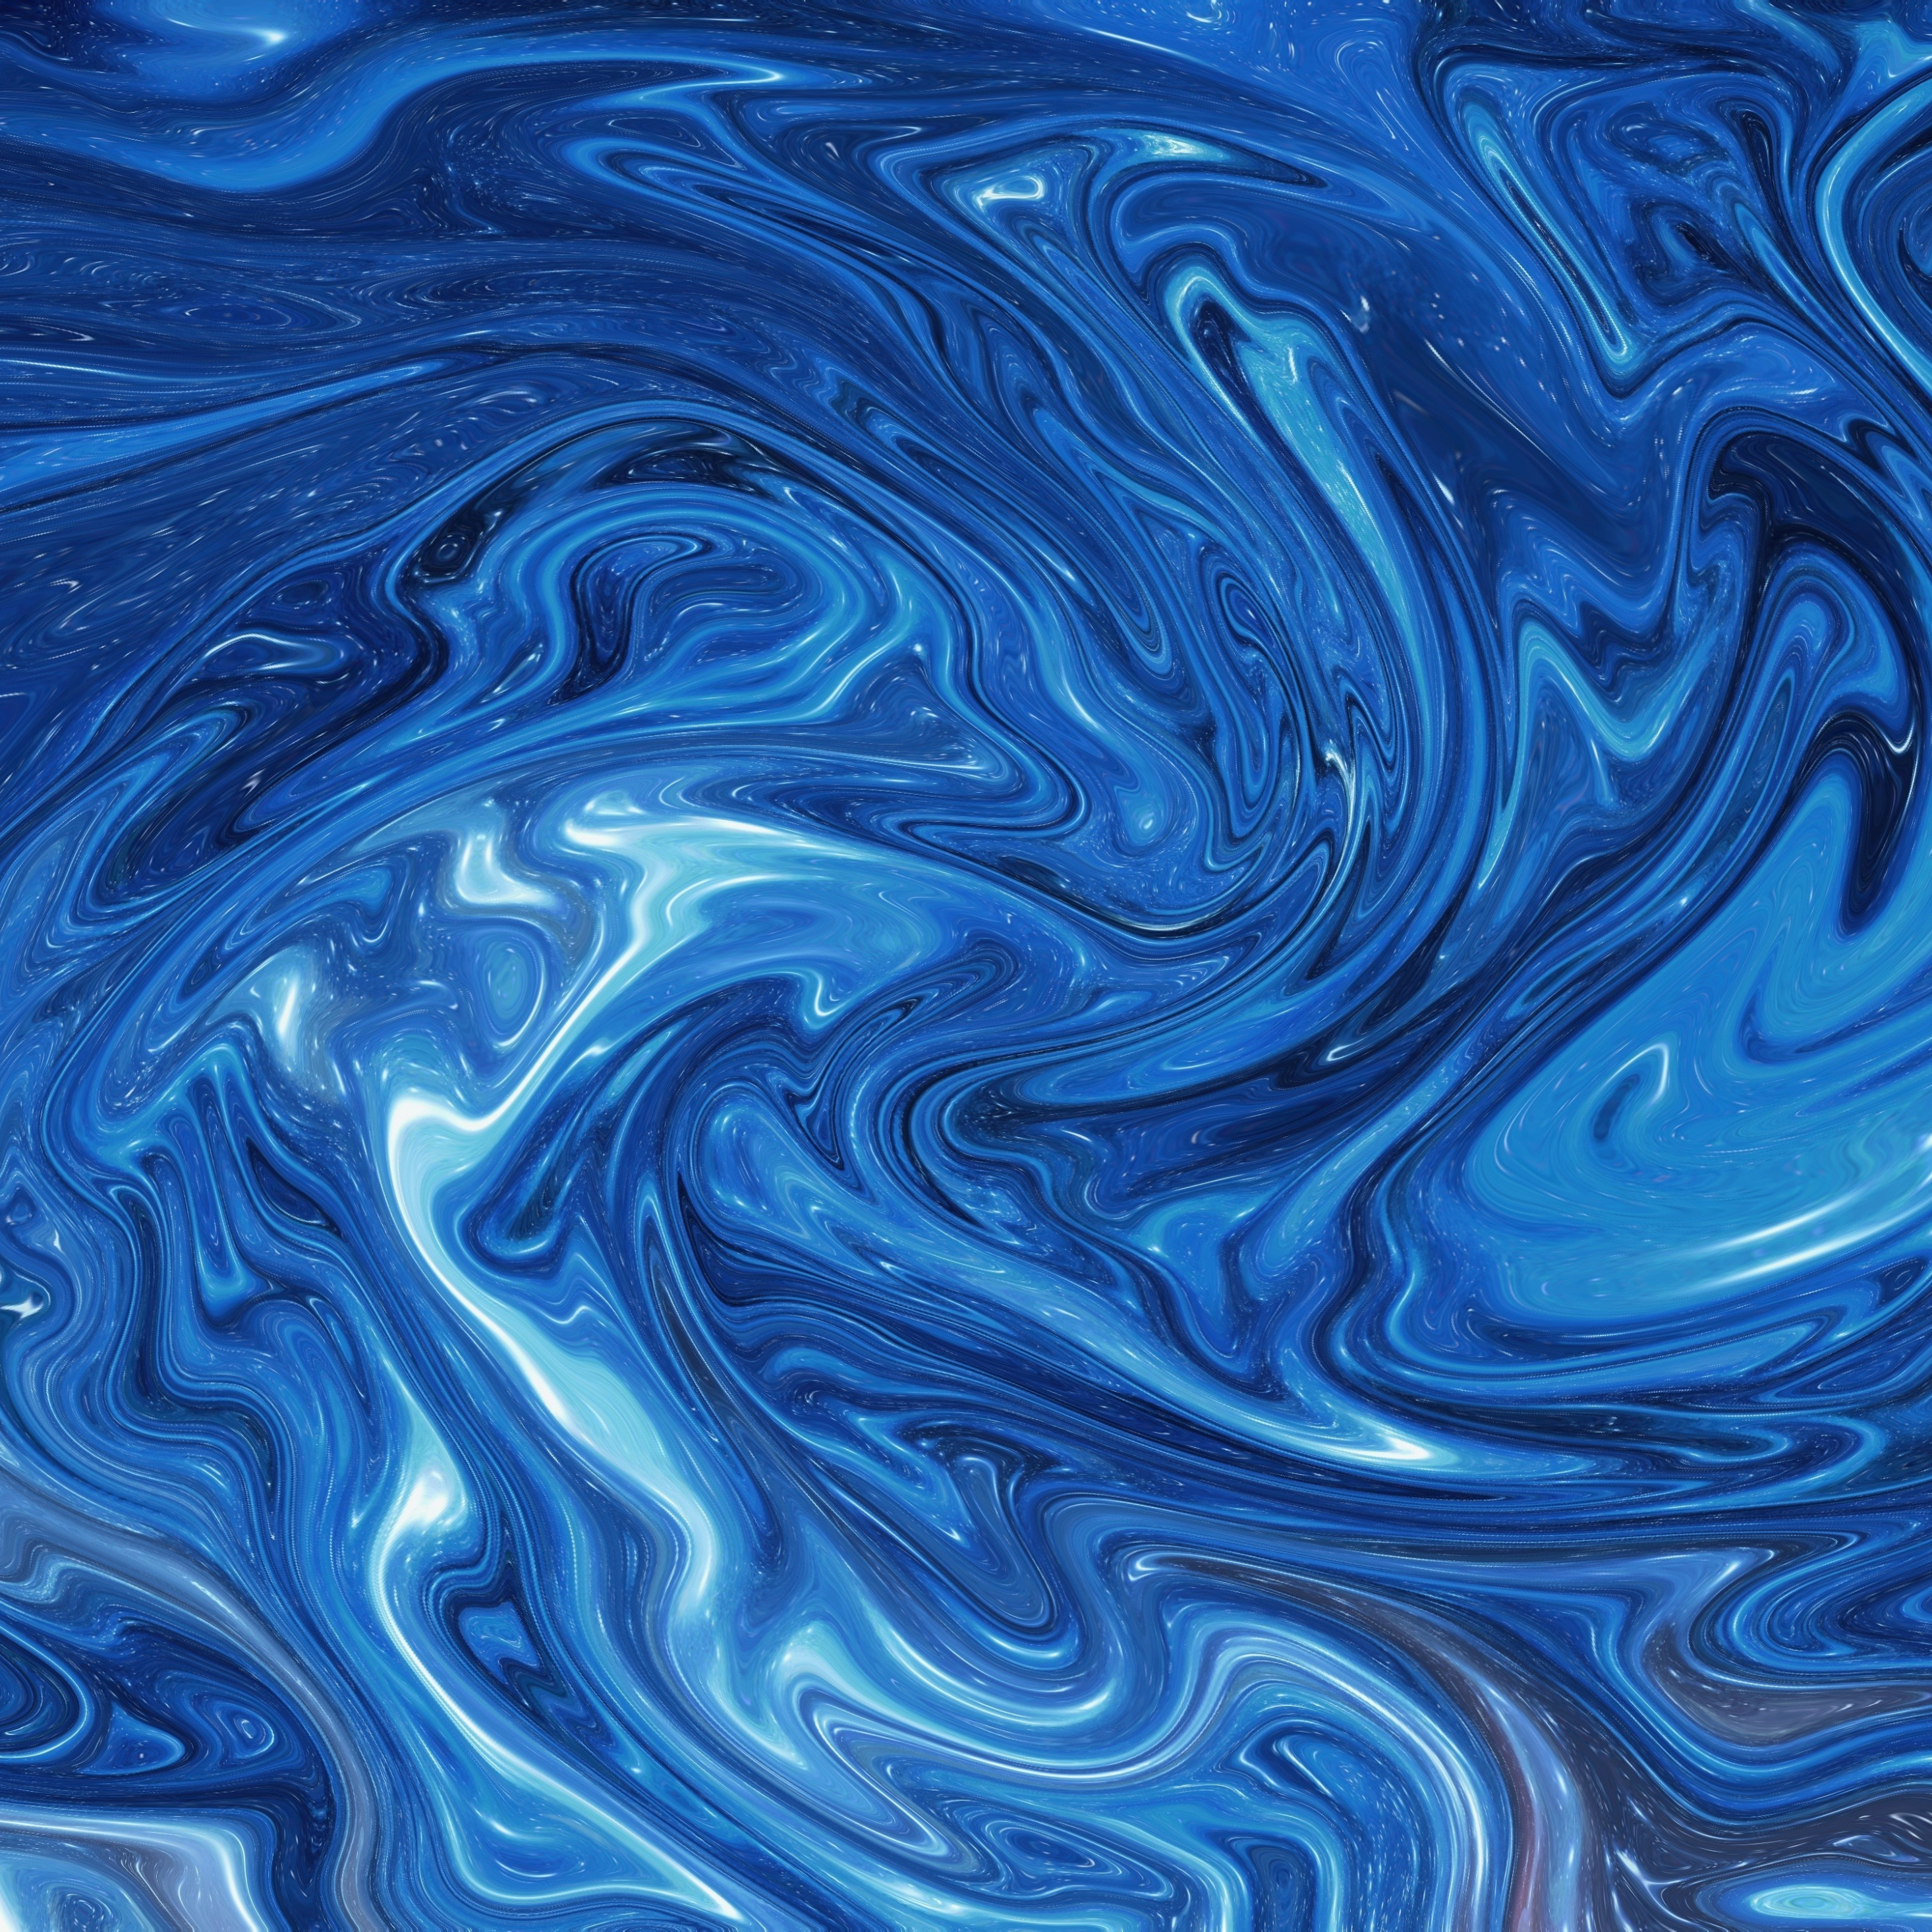 Download abstract, blue liquid mixture, pattern 2932x2932 wallpaper, ipad pro retina, 2932x2932 image, background, 1895